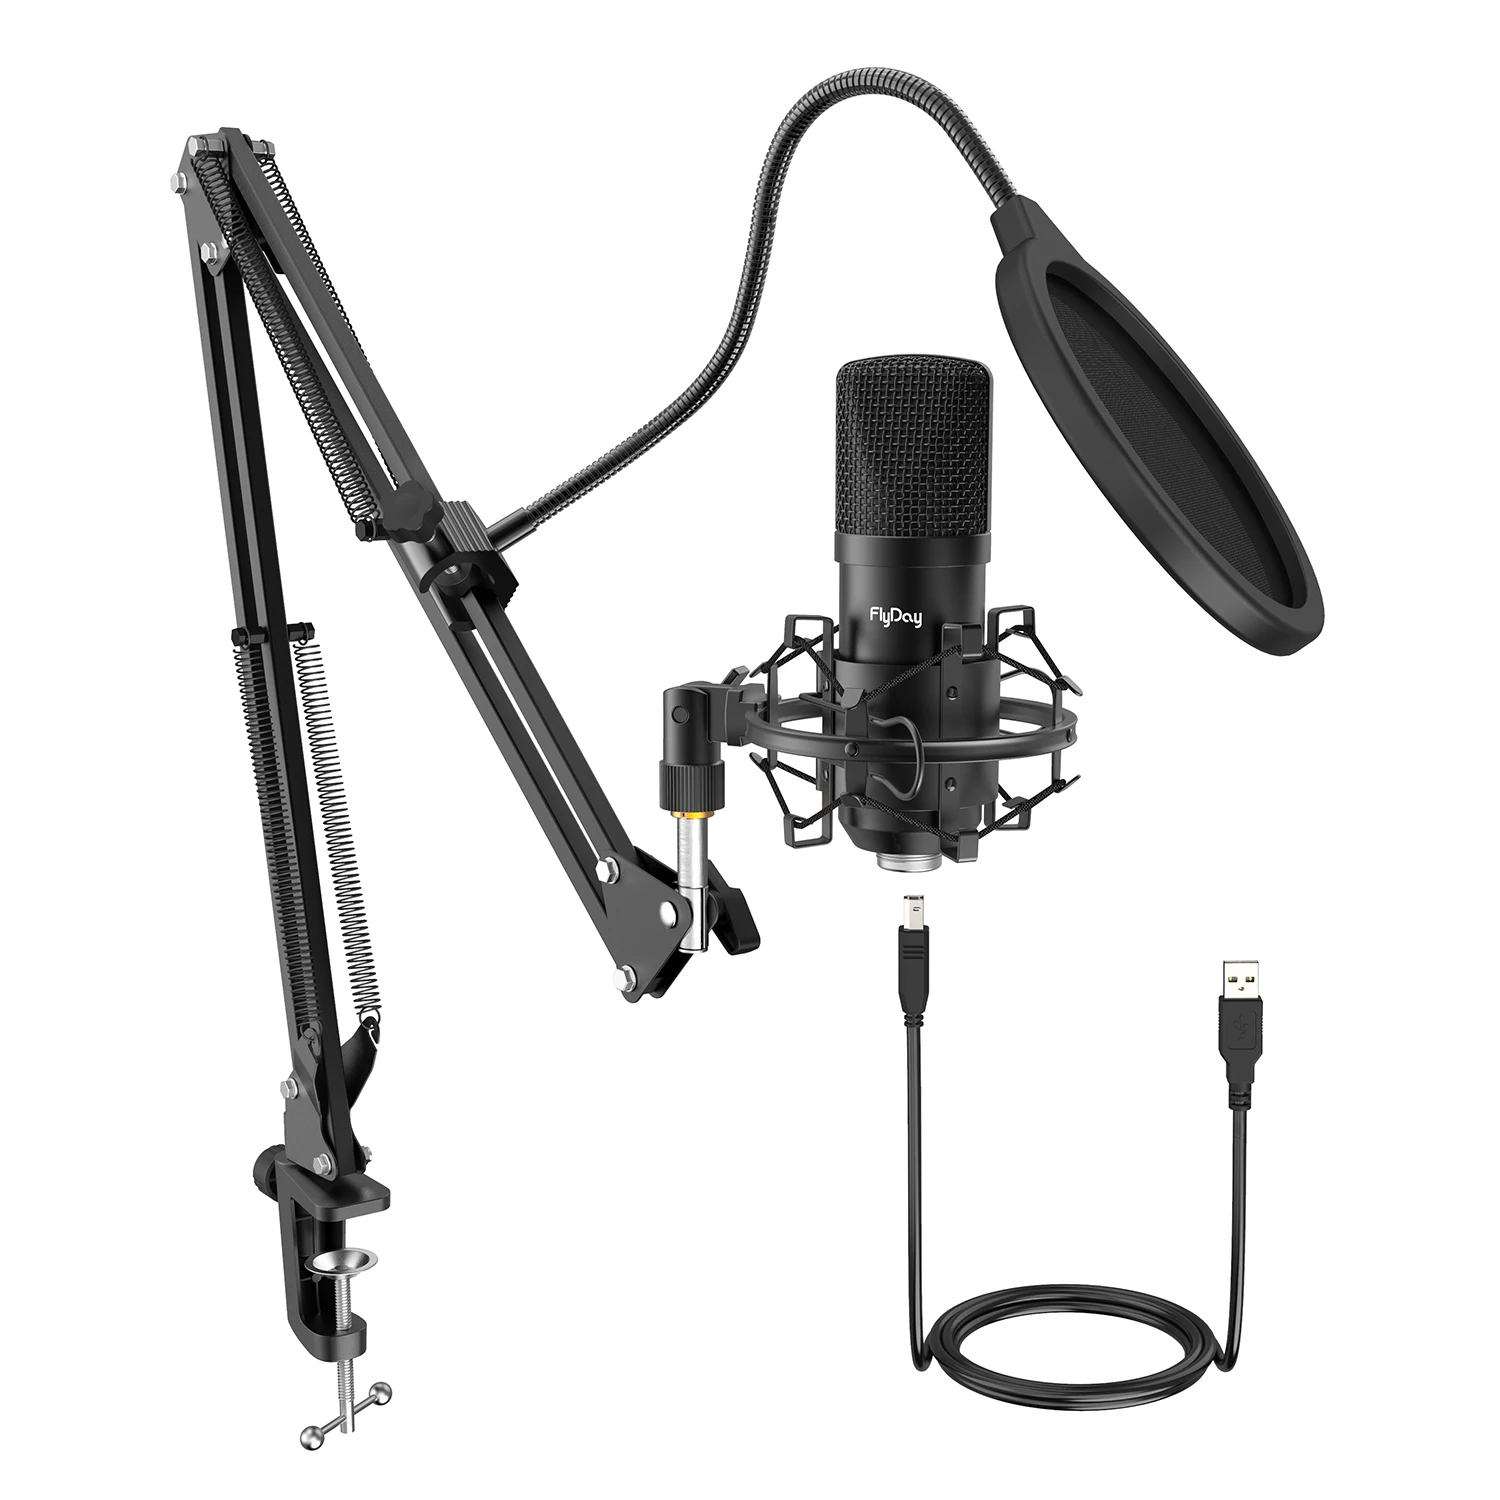 Flyday T730 professional OEM ODM microfono condensador Gaming Condenser mic kit USB recording microphone